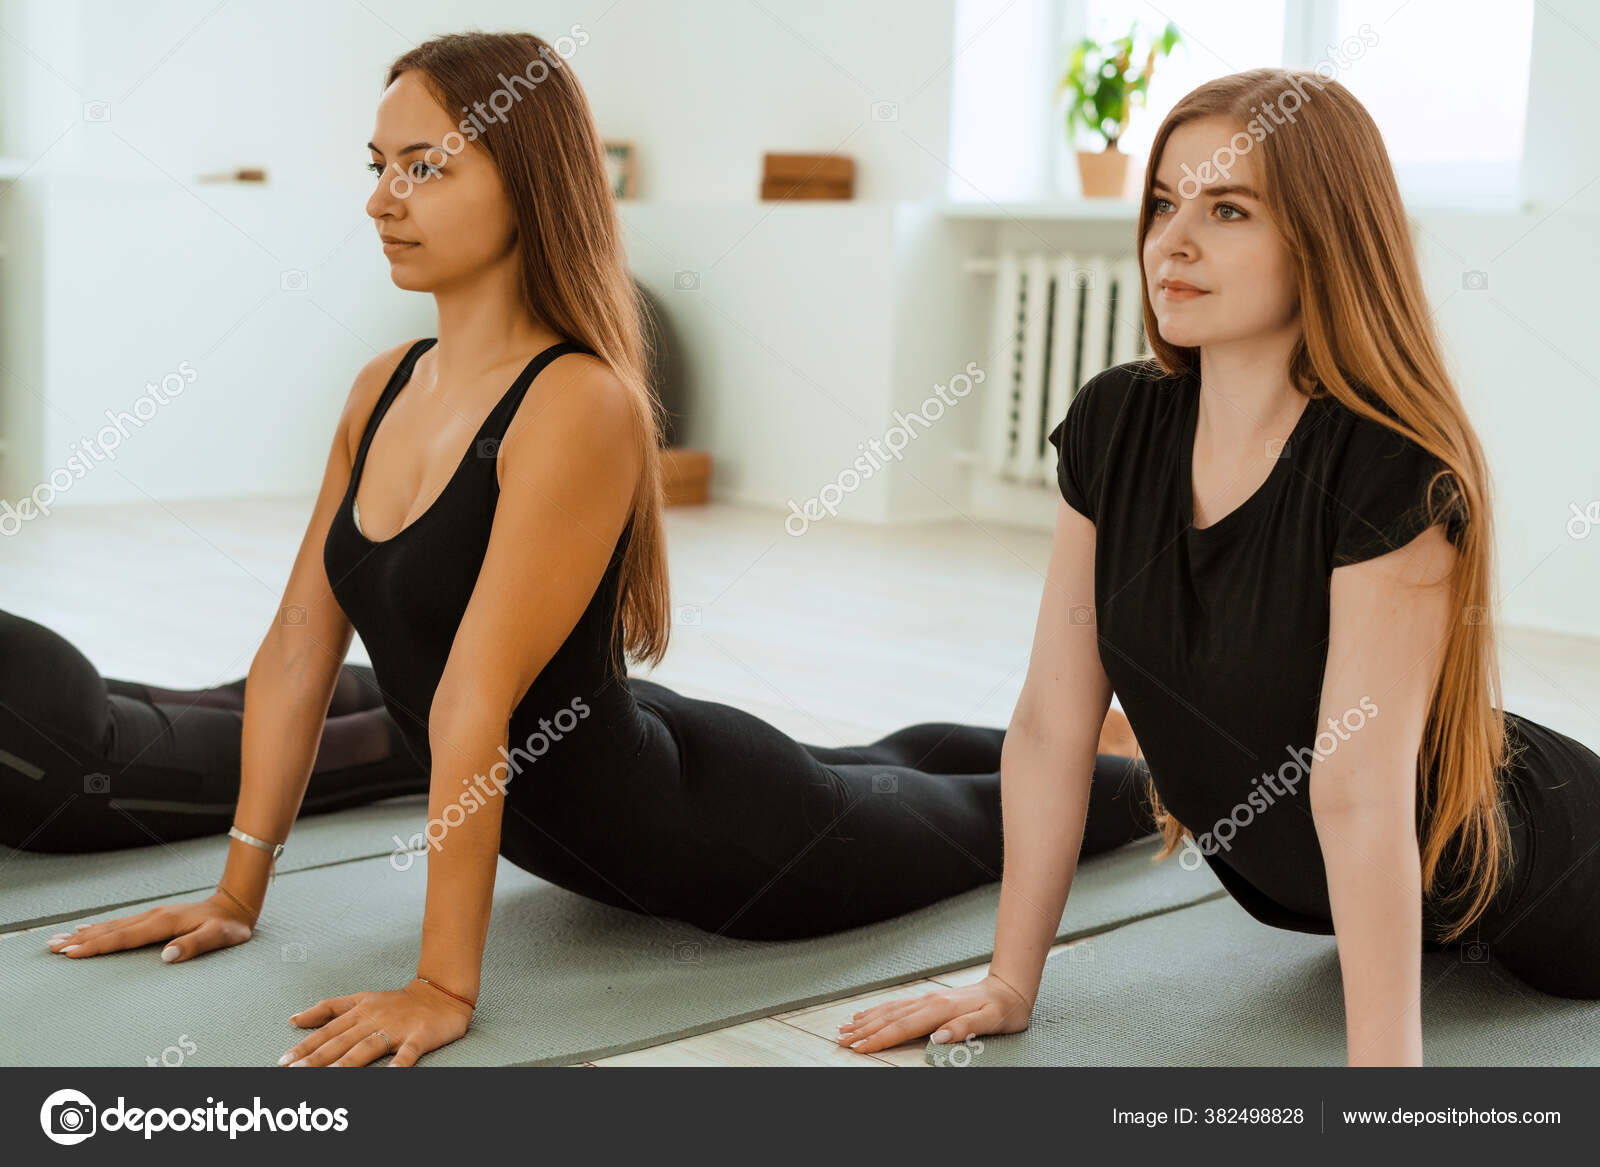 Yoga sex Stockfotos, lizenzfreie Yoga sex Bilder Depositphotos